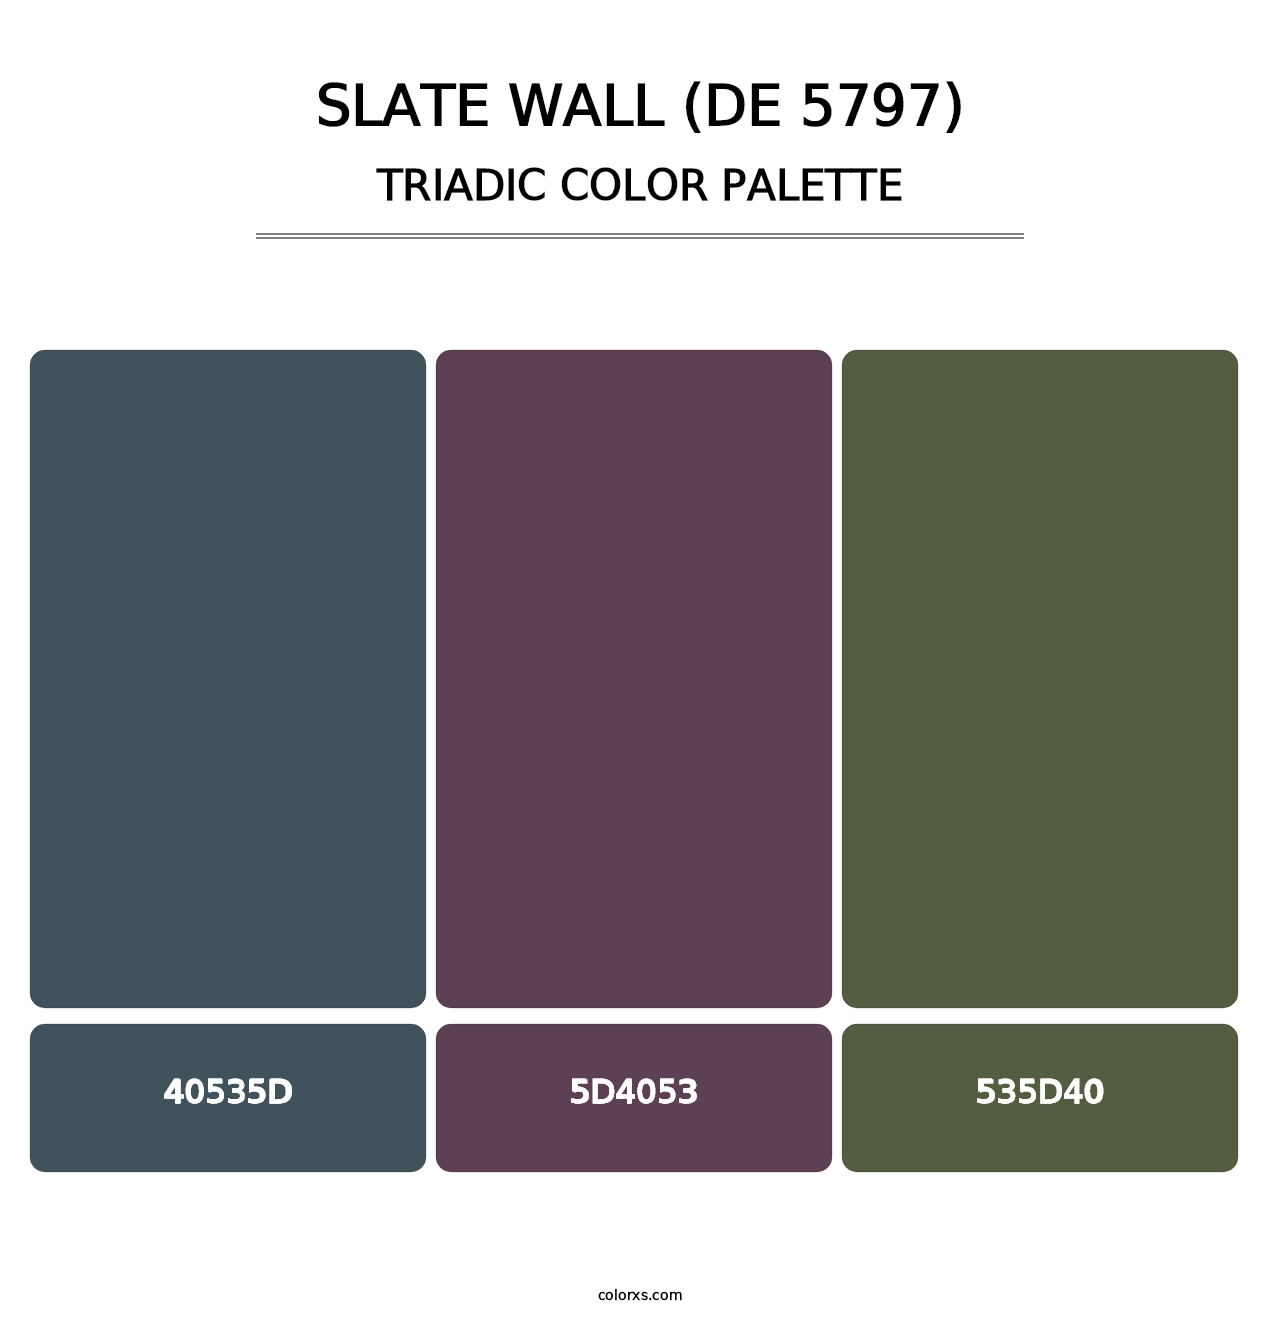 Slate Wall (DE 5797) - Triadic Color Palette